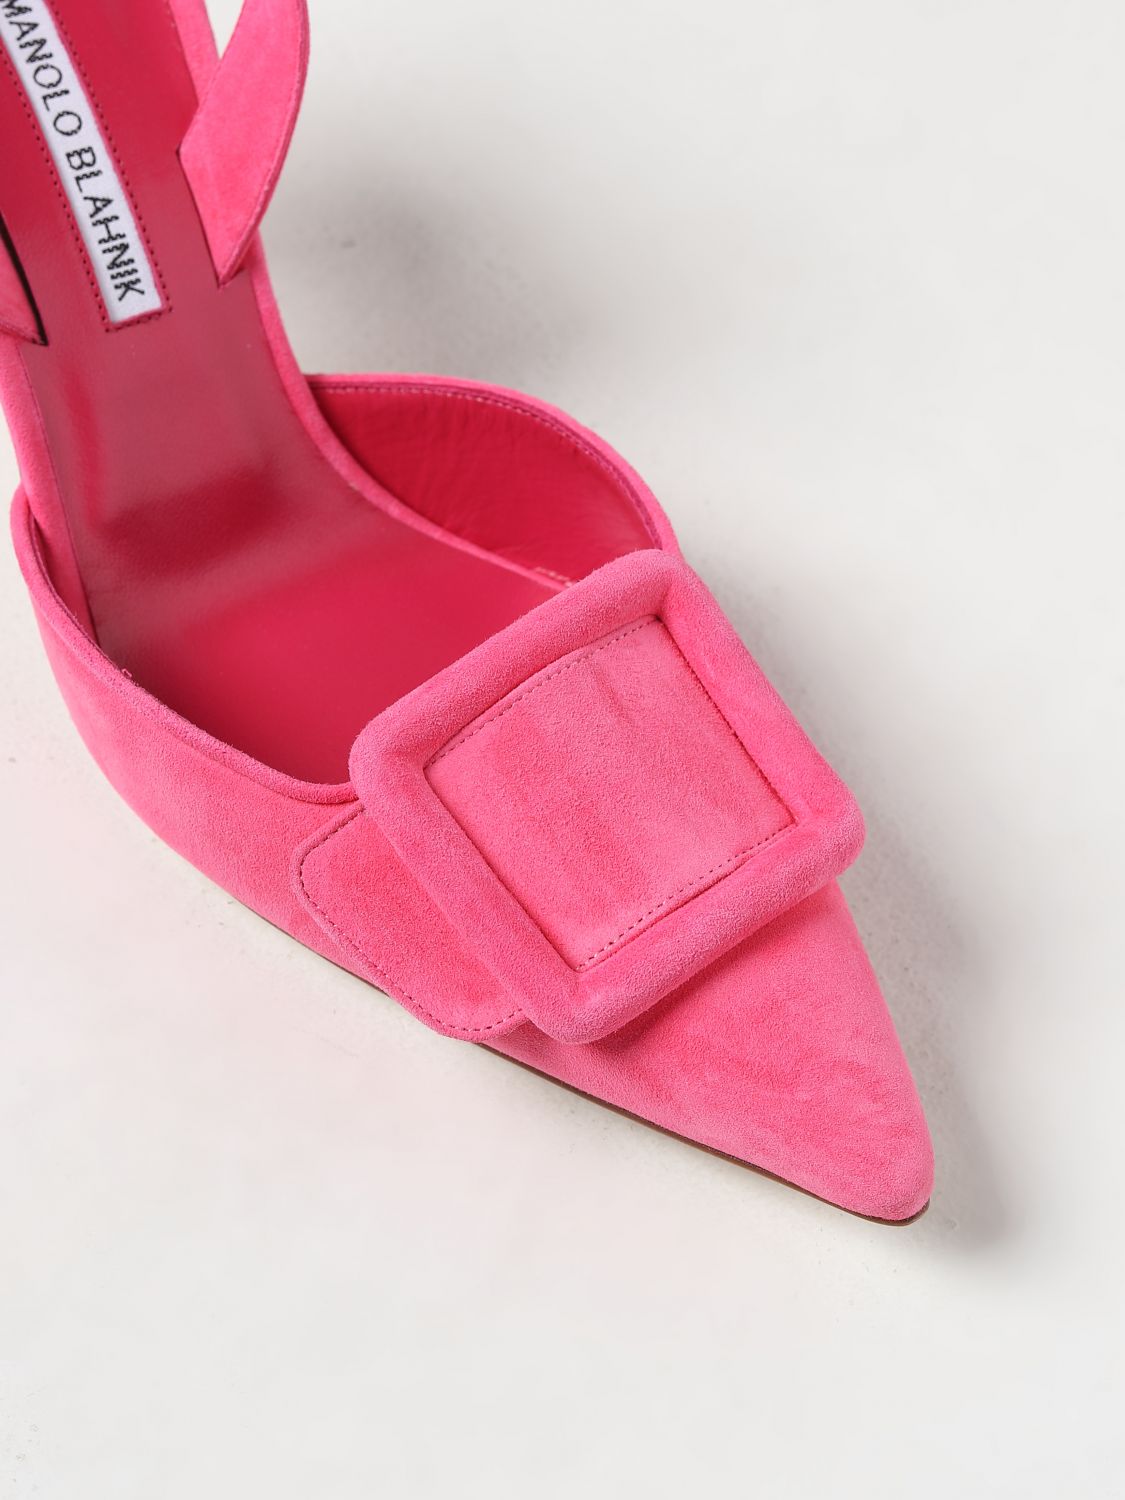 MANOLO BLAHNIK: high heel shoes for woman - Fuchsia | Manolo Blahnik ...